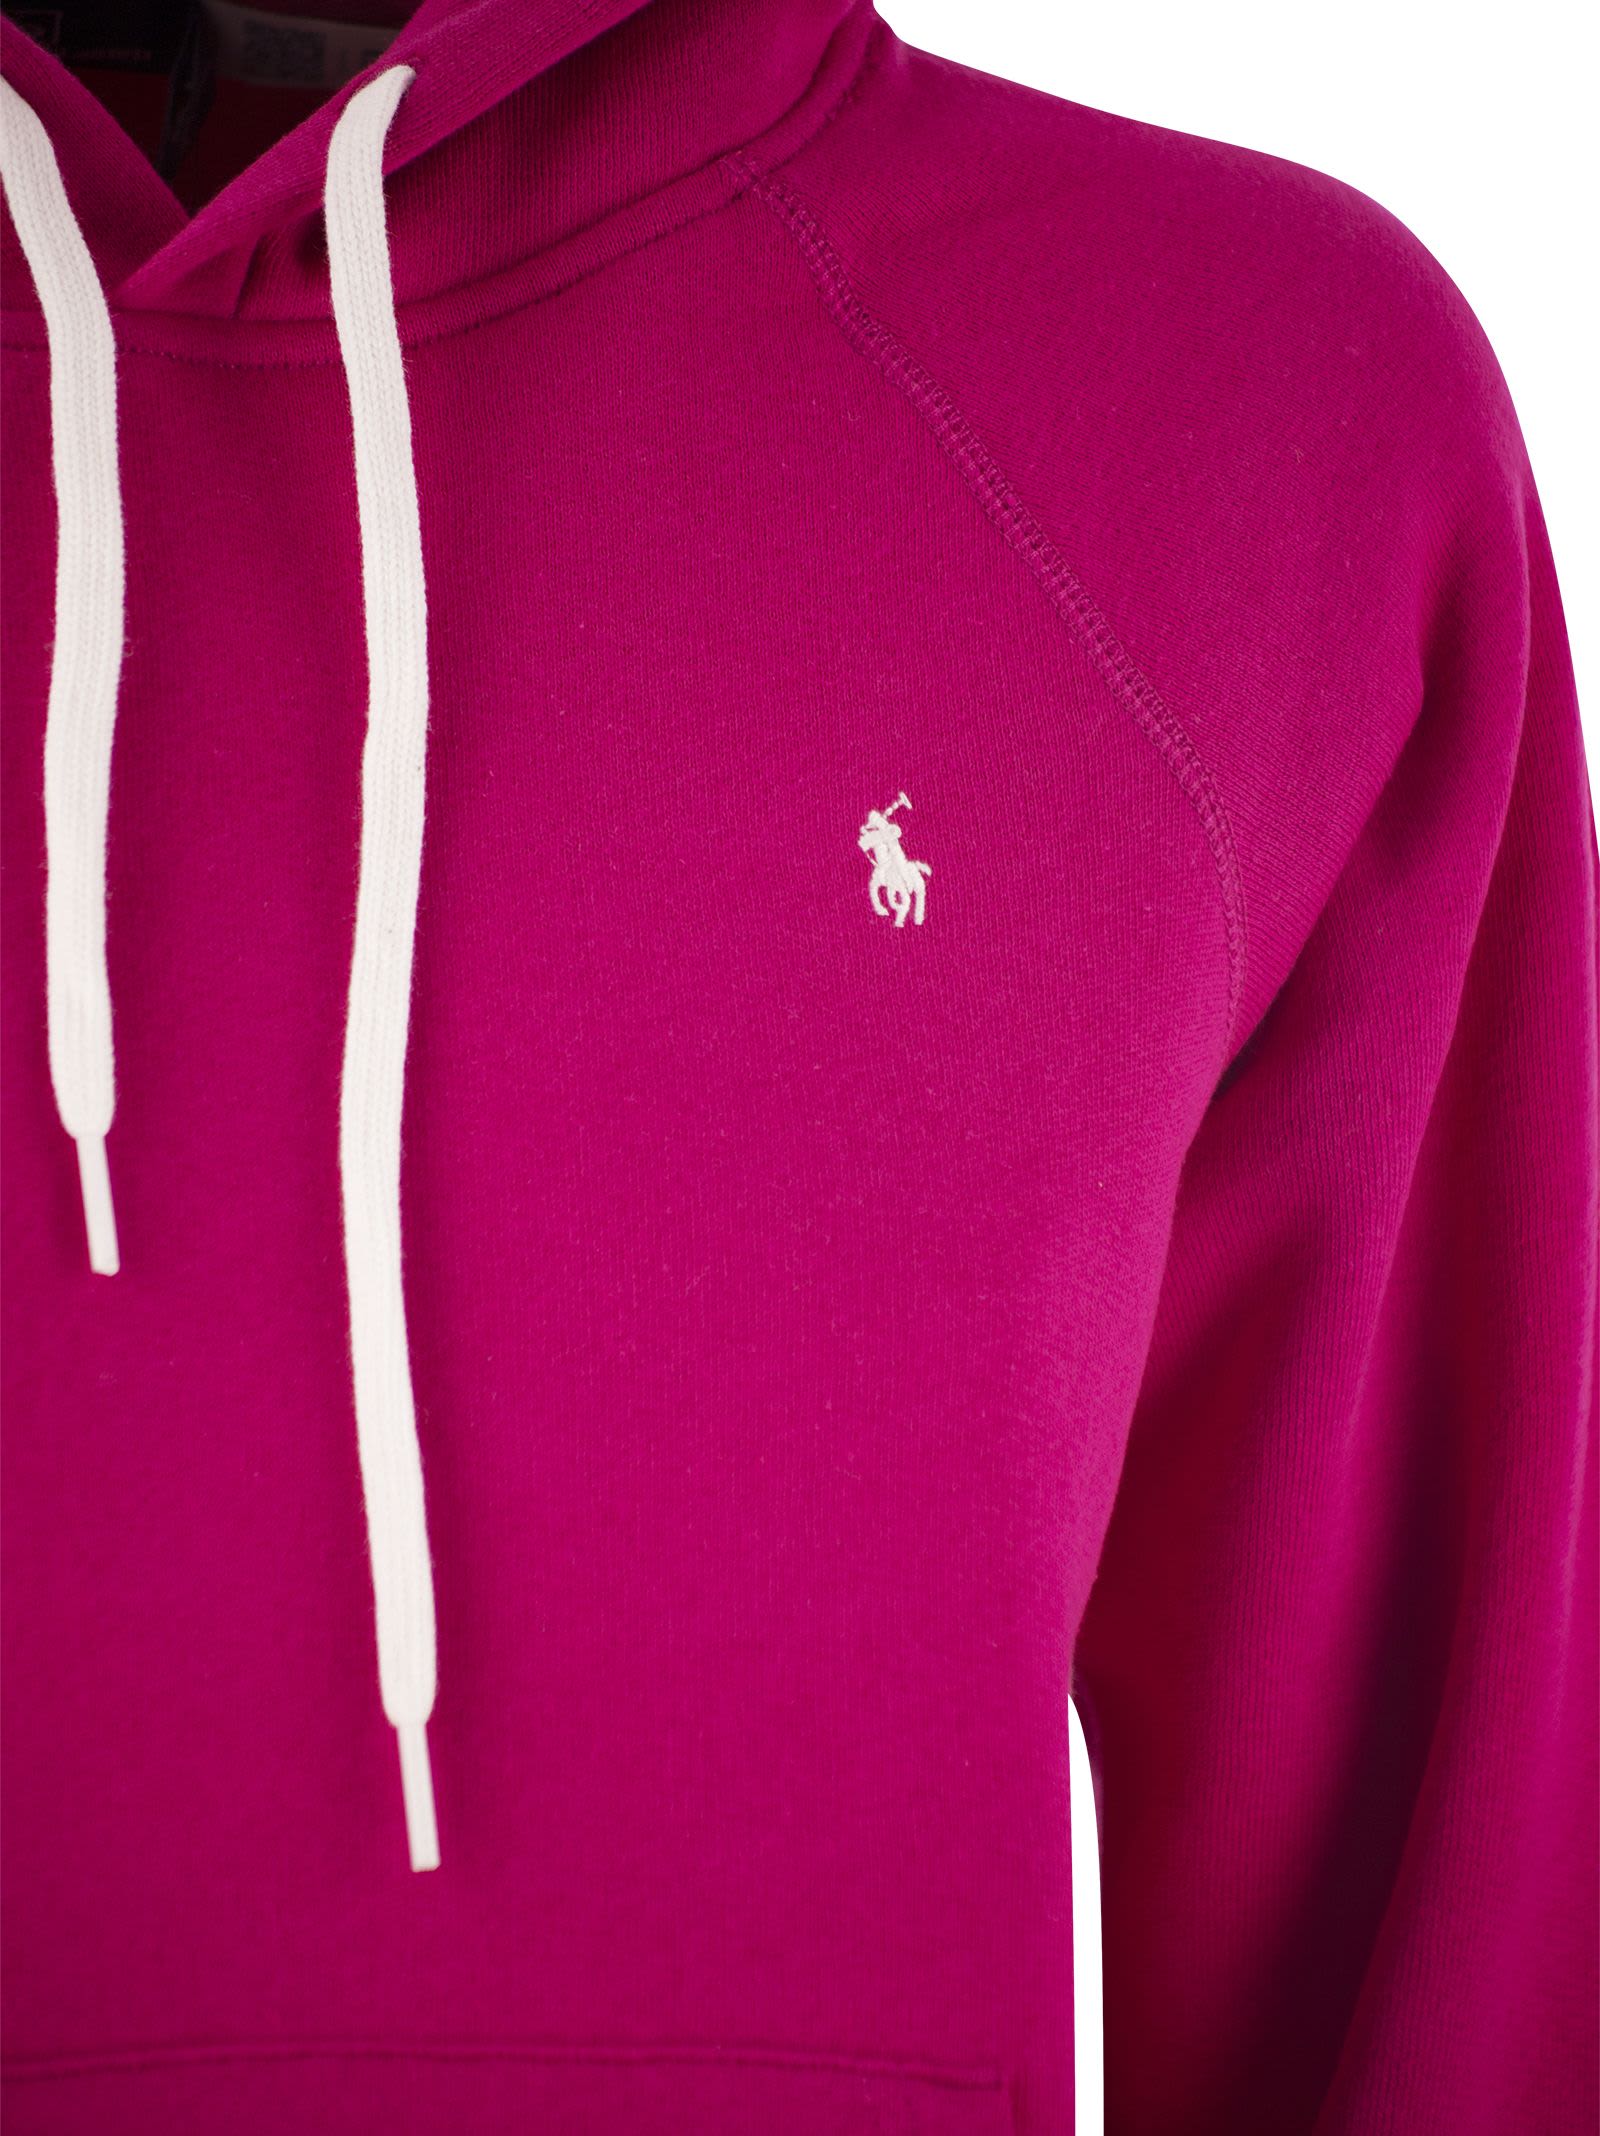 Shop Polo Ralph Lauren Hooded Sweatshirt In Fuxia